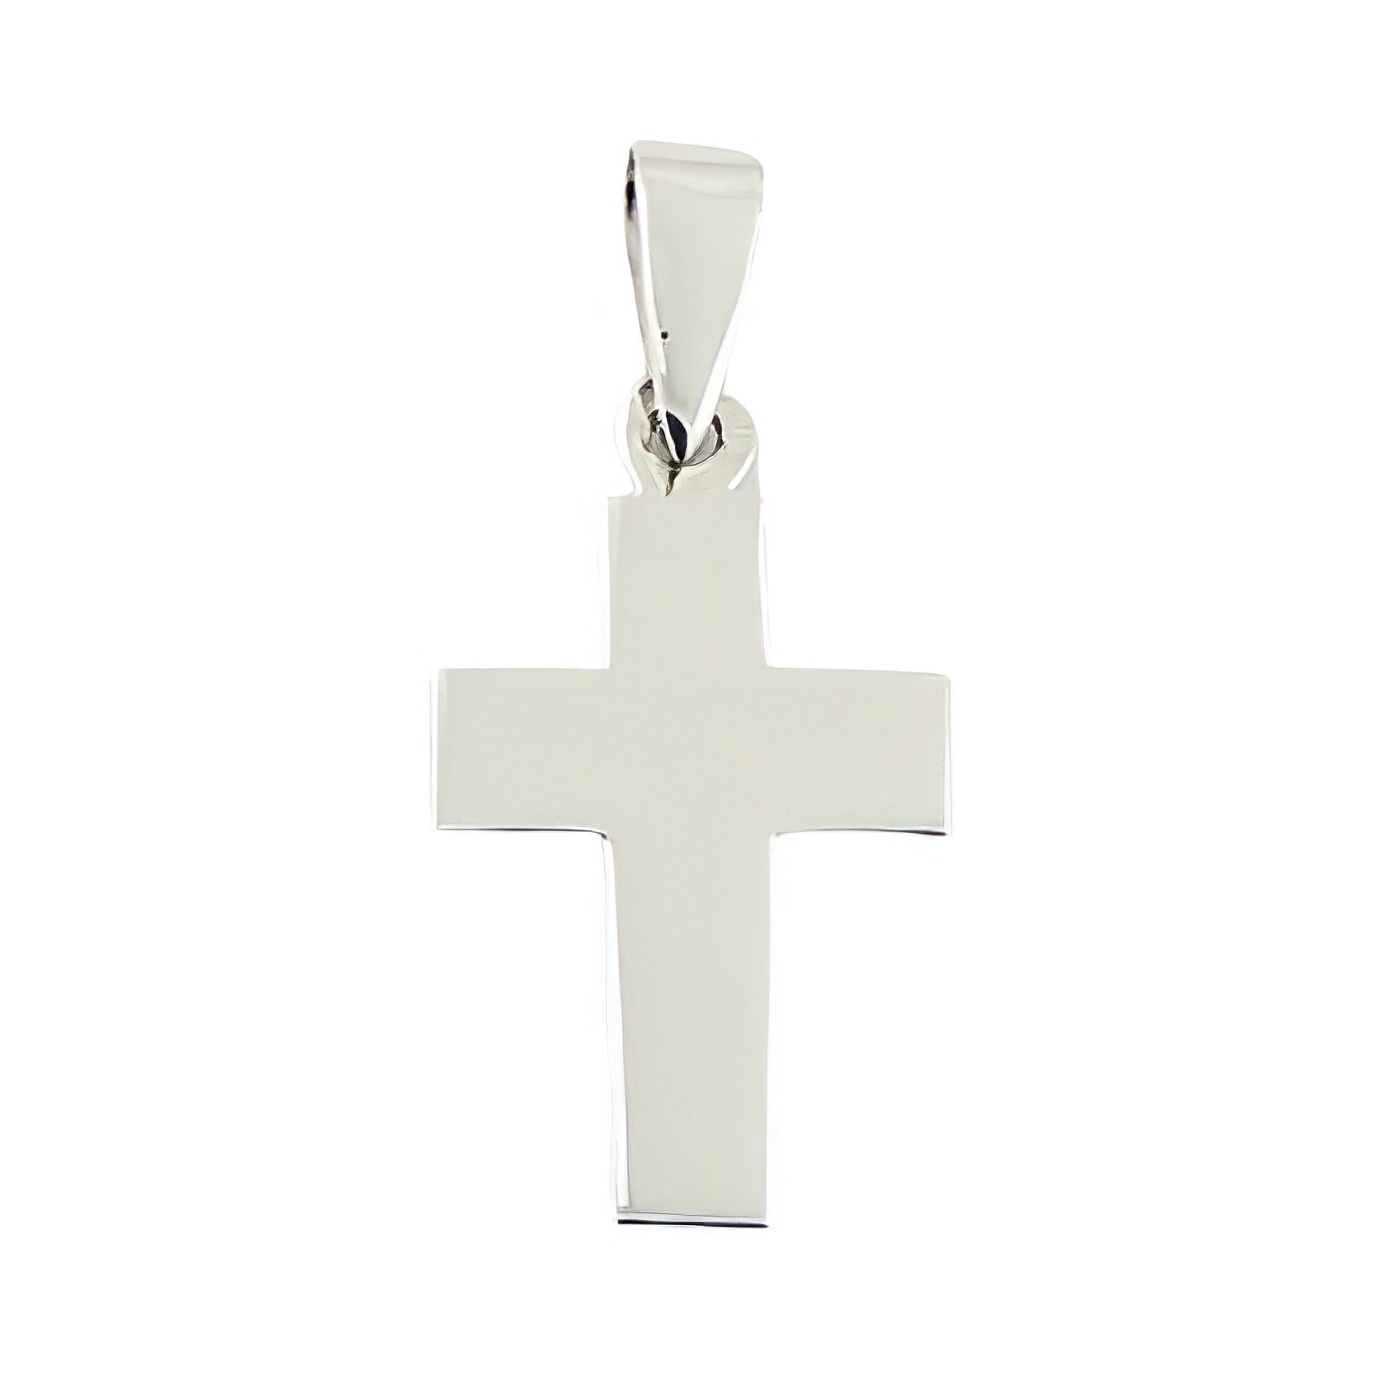 Minimalistic Design Shiny Sterling Silver Cross Pendant by BeYindi 